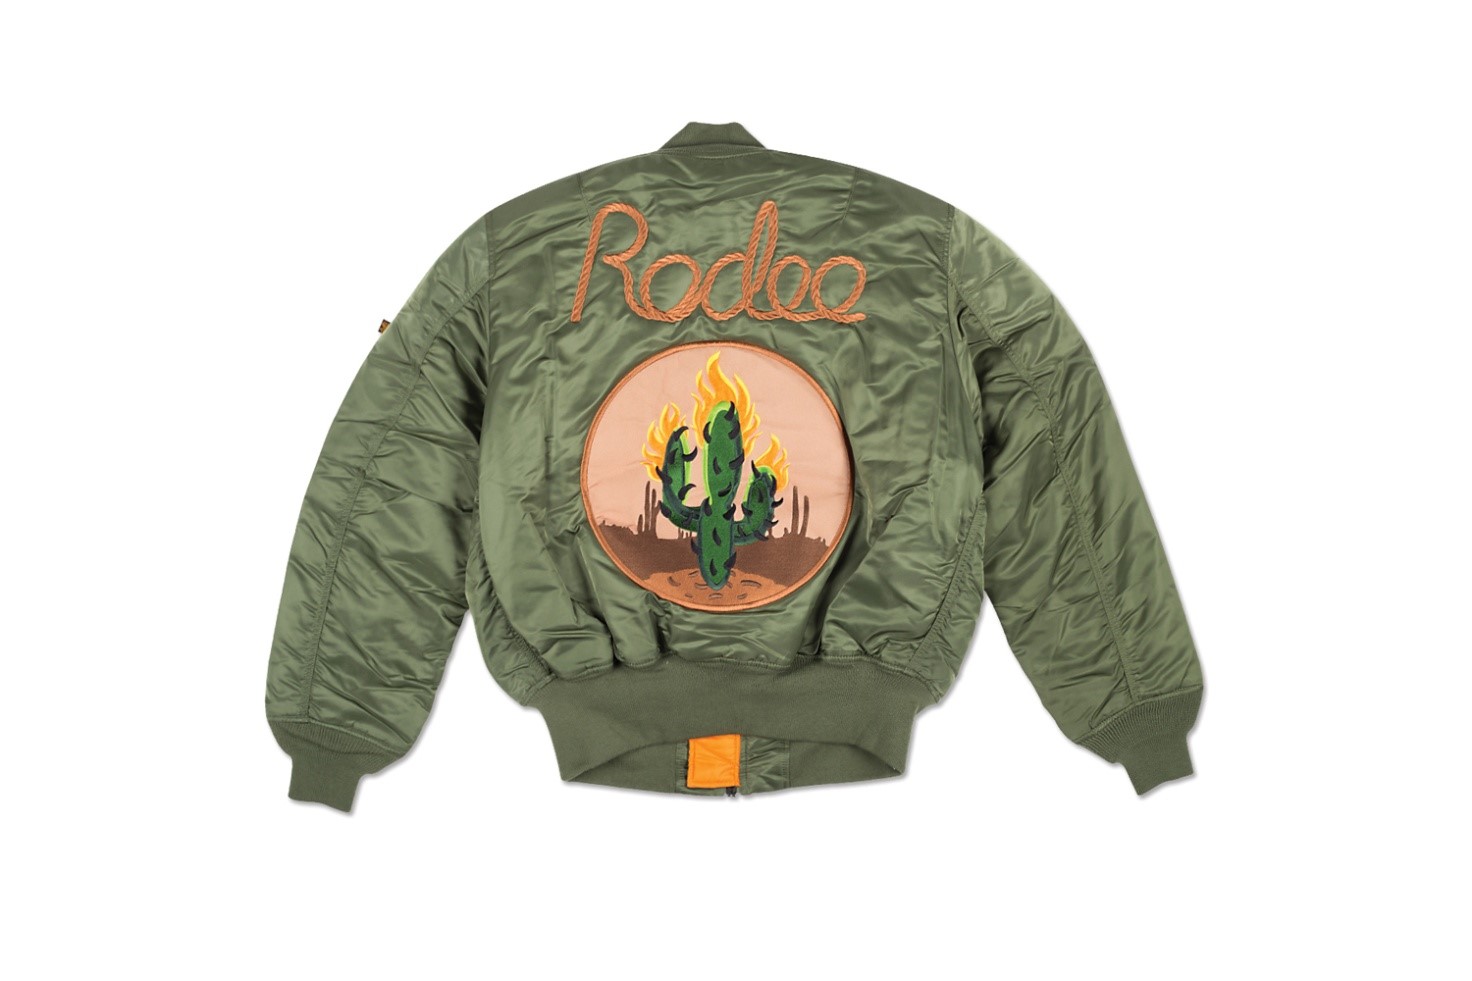 Rodeo_jacket